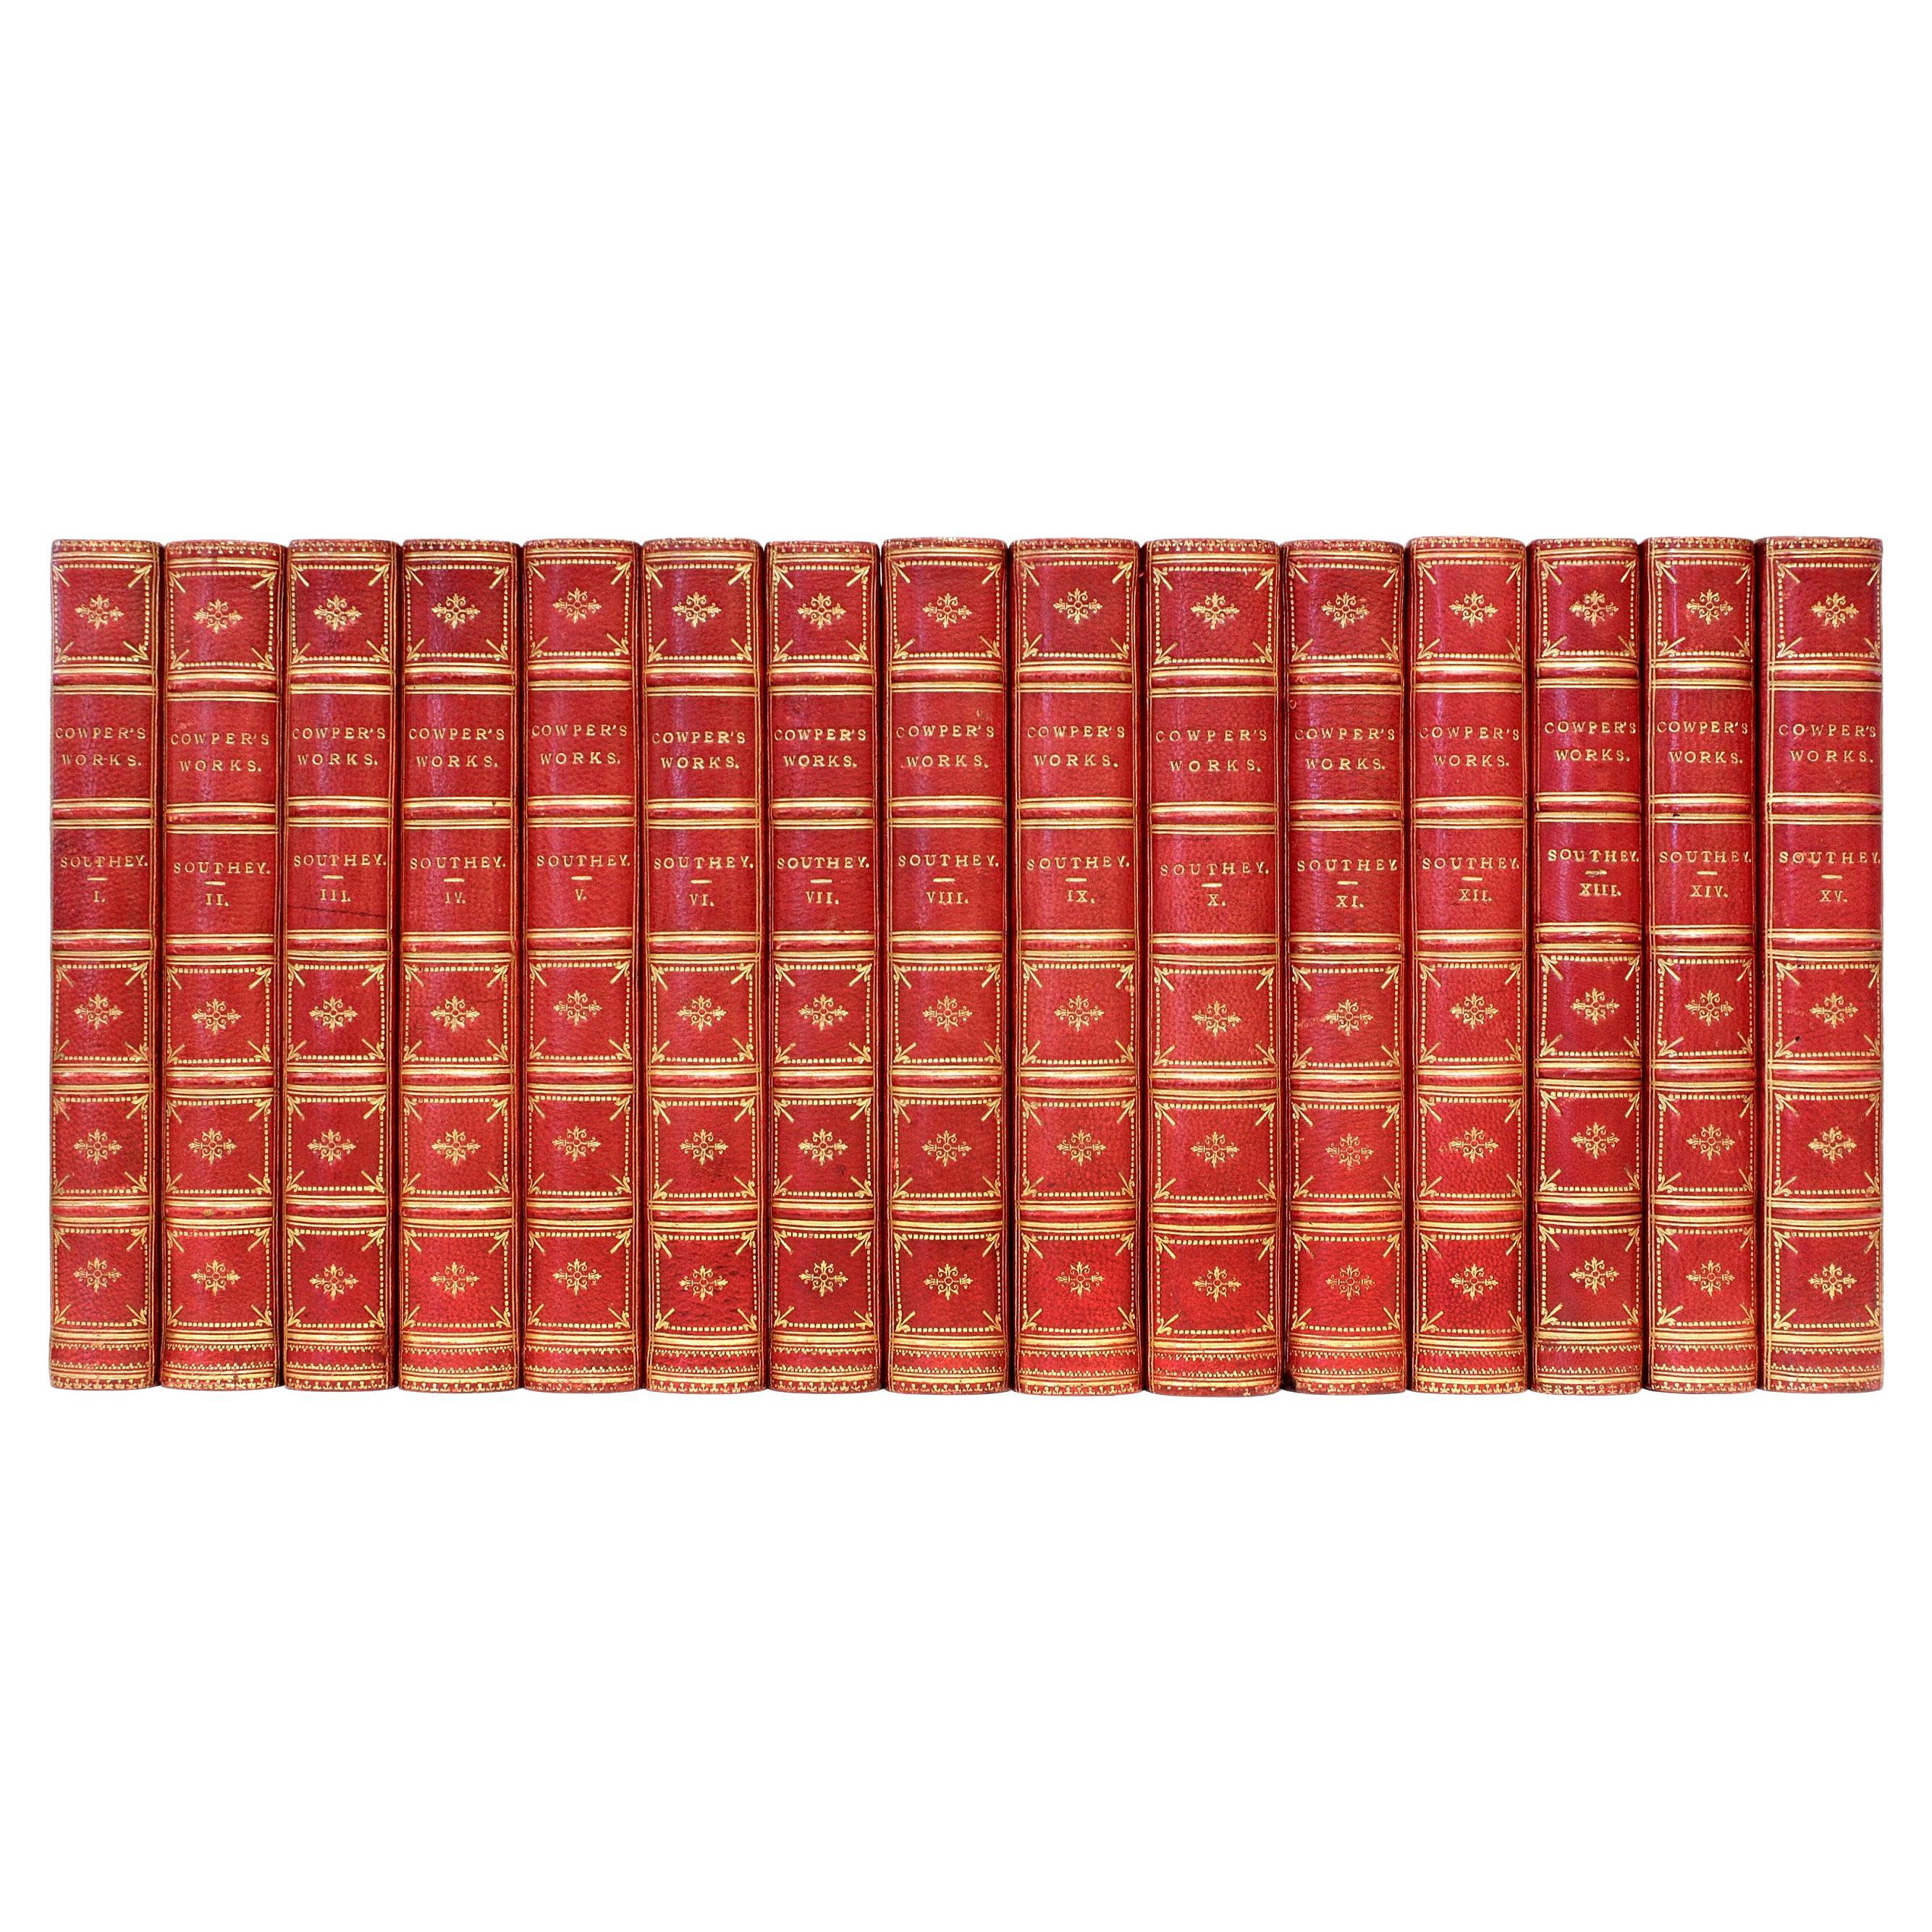 The Works of William Cowper. 15 volumes, 1835, EN FINE BANDE DE CUIR !